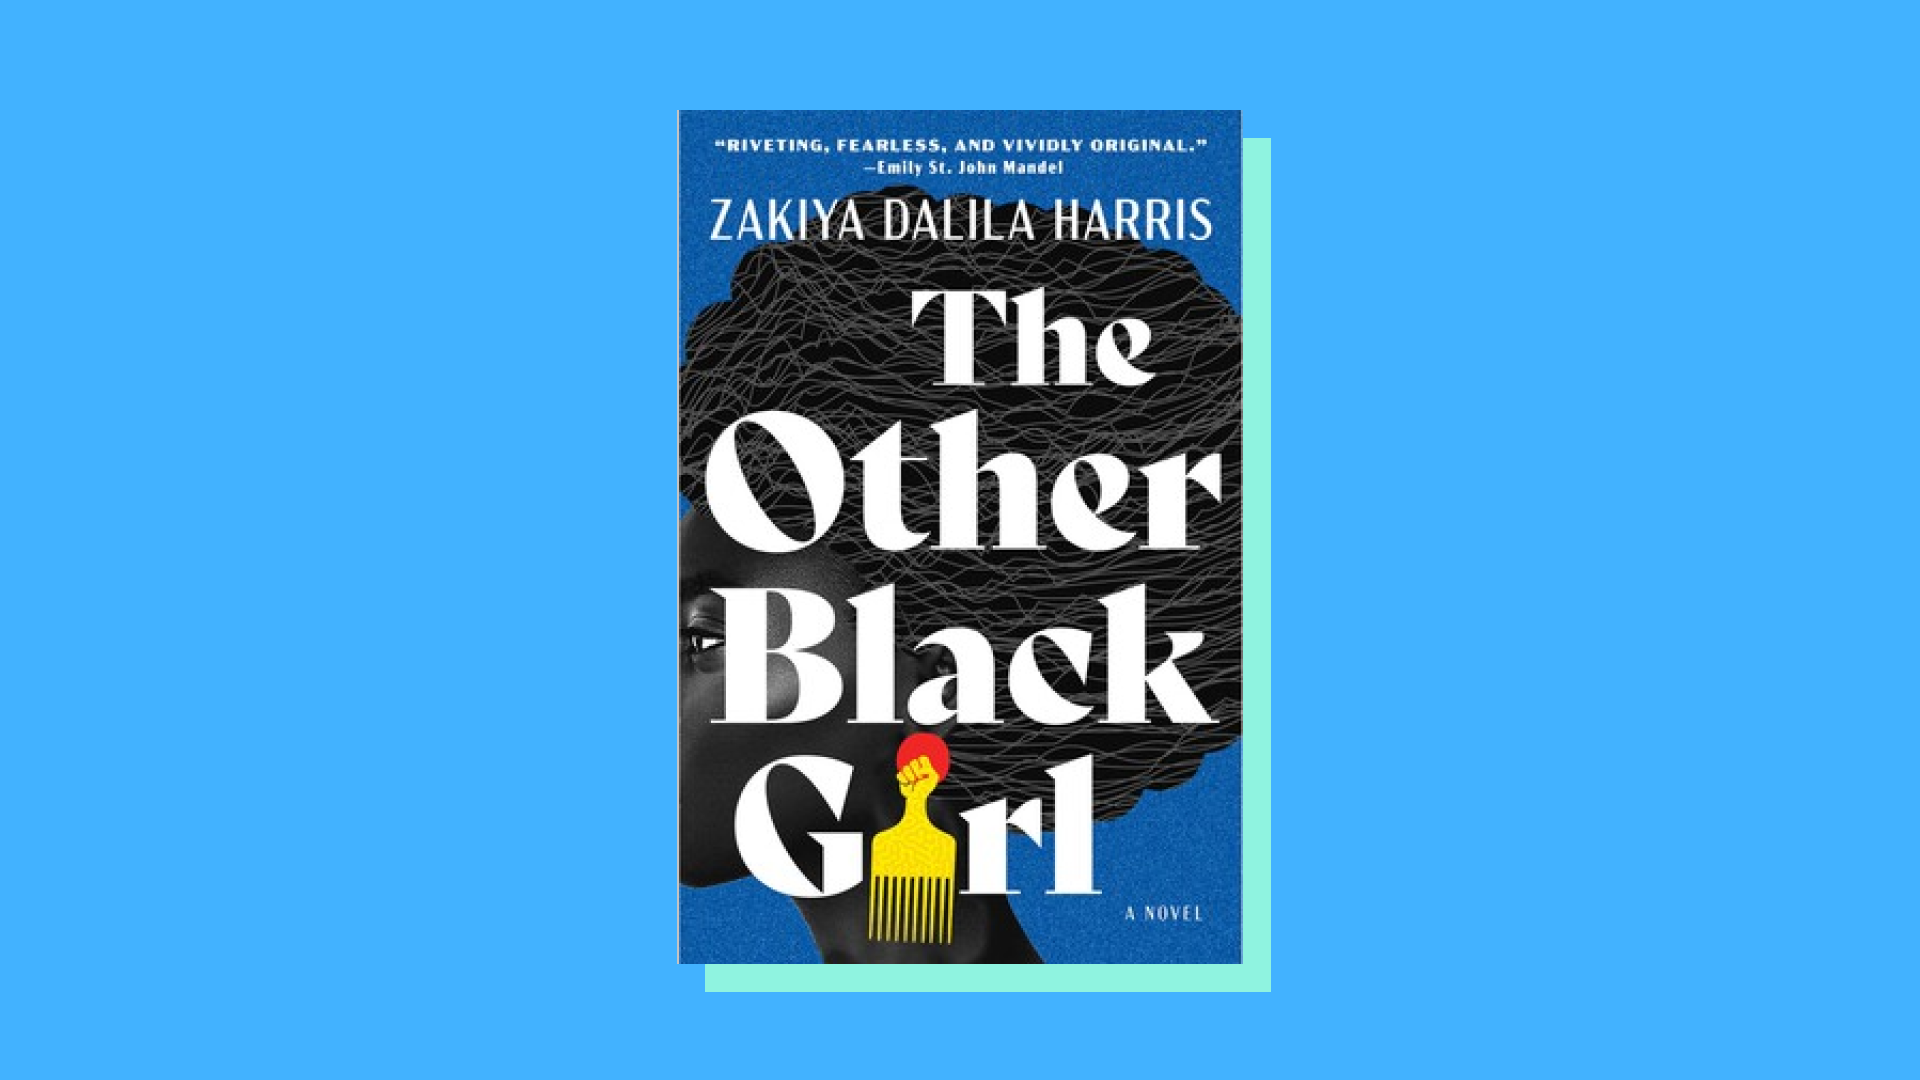 “The Other Black Girl” by Zakiya Dalila Harris